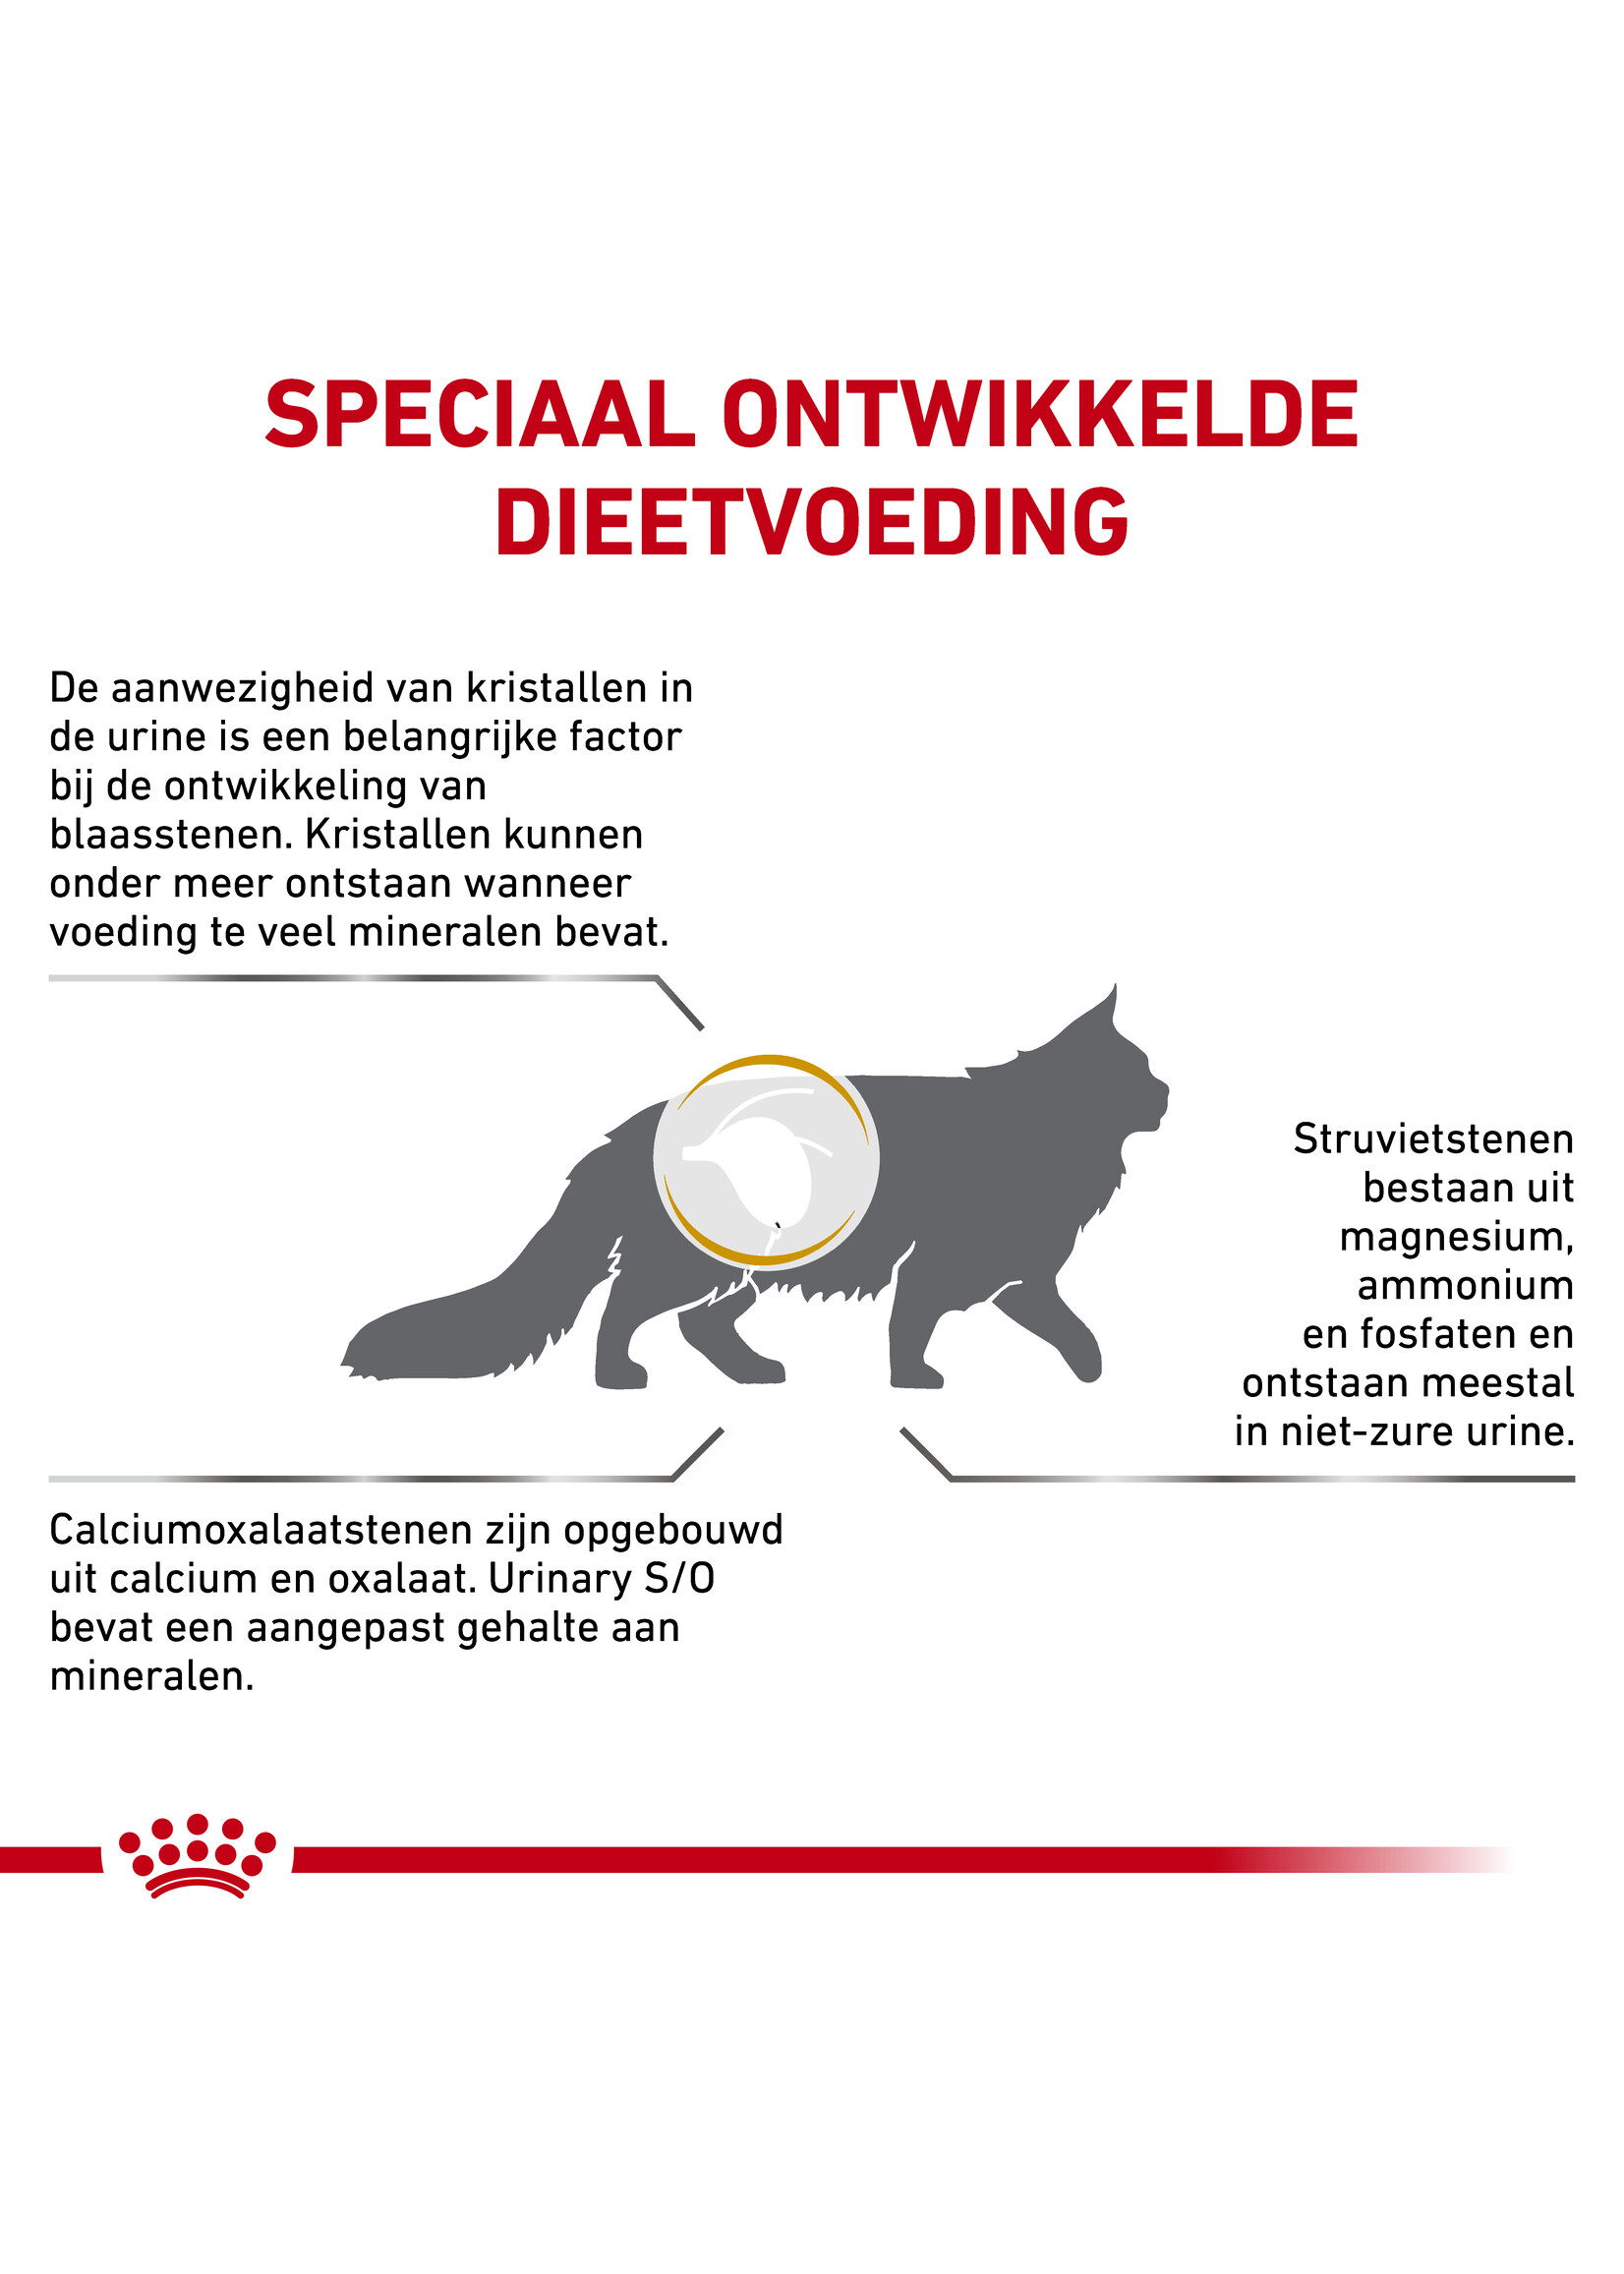 Royal Canin Royal Canin Urinary S/O Katze